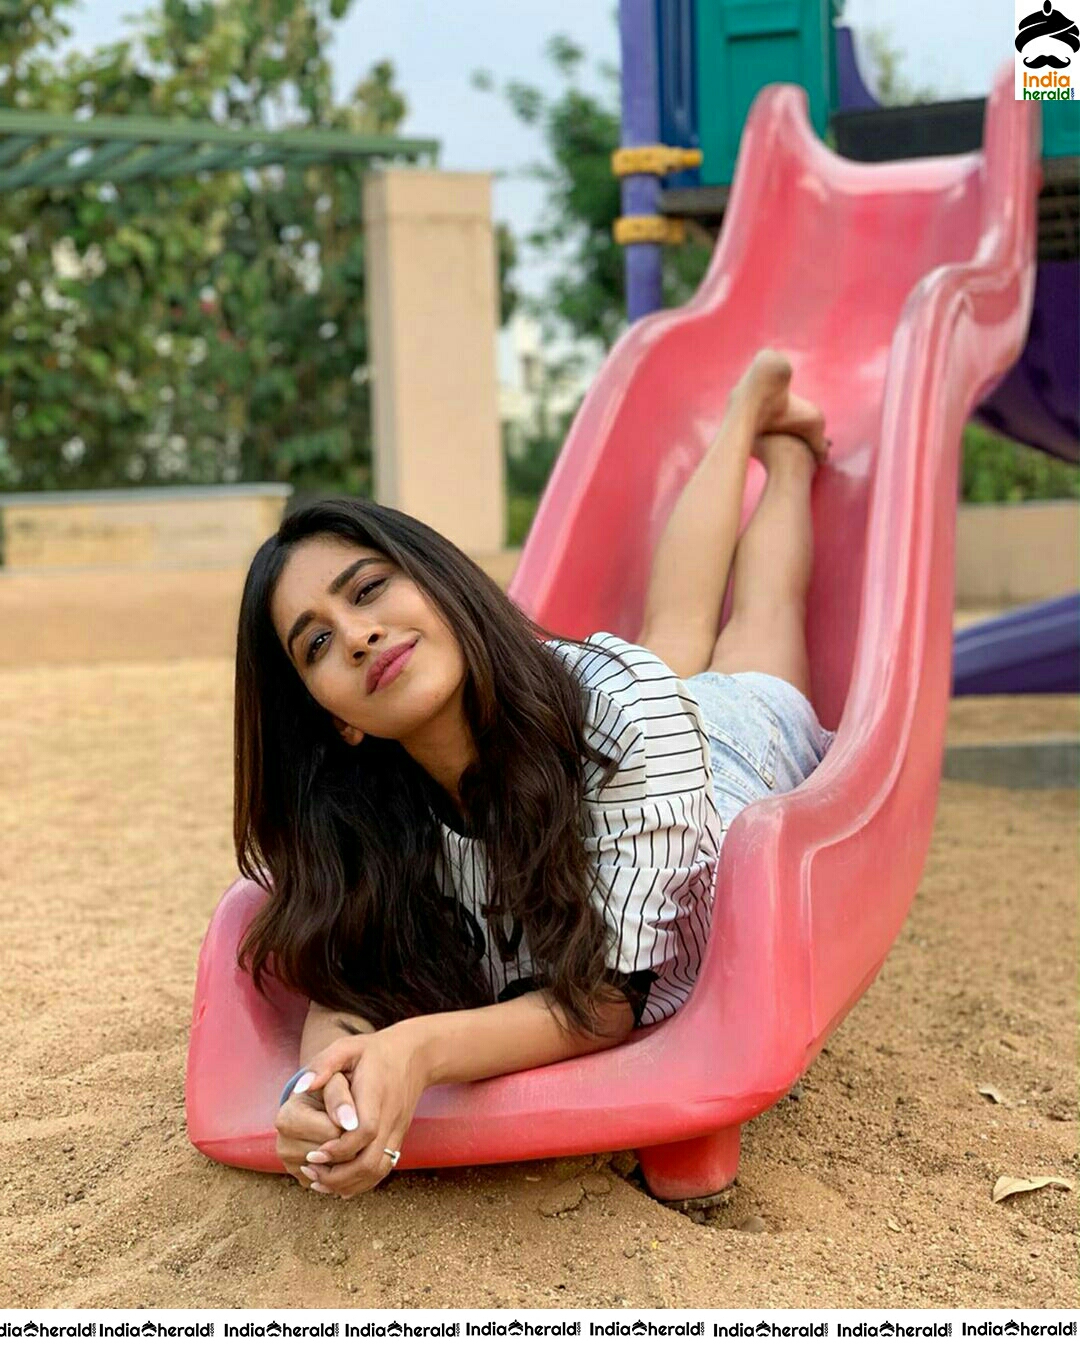 Nabha Natesh Hot Thighs Show While Playing At The Park